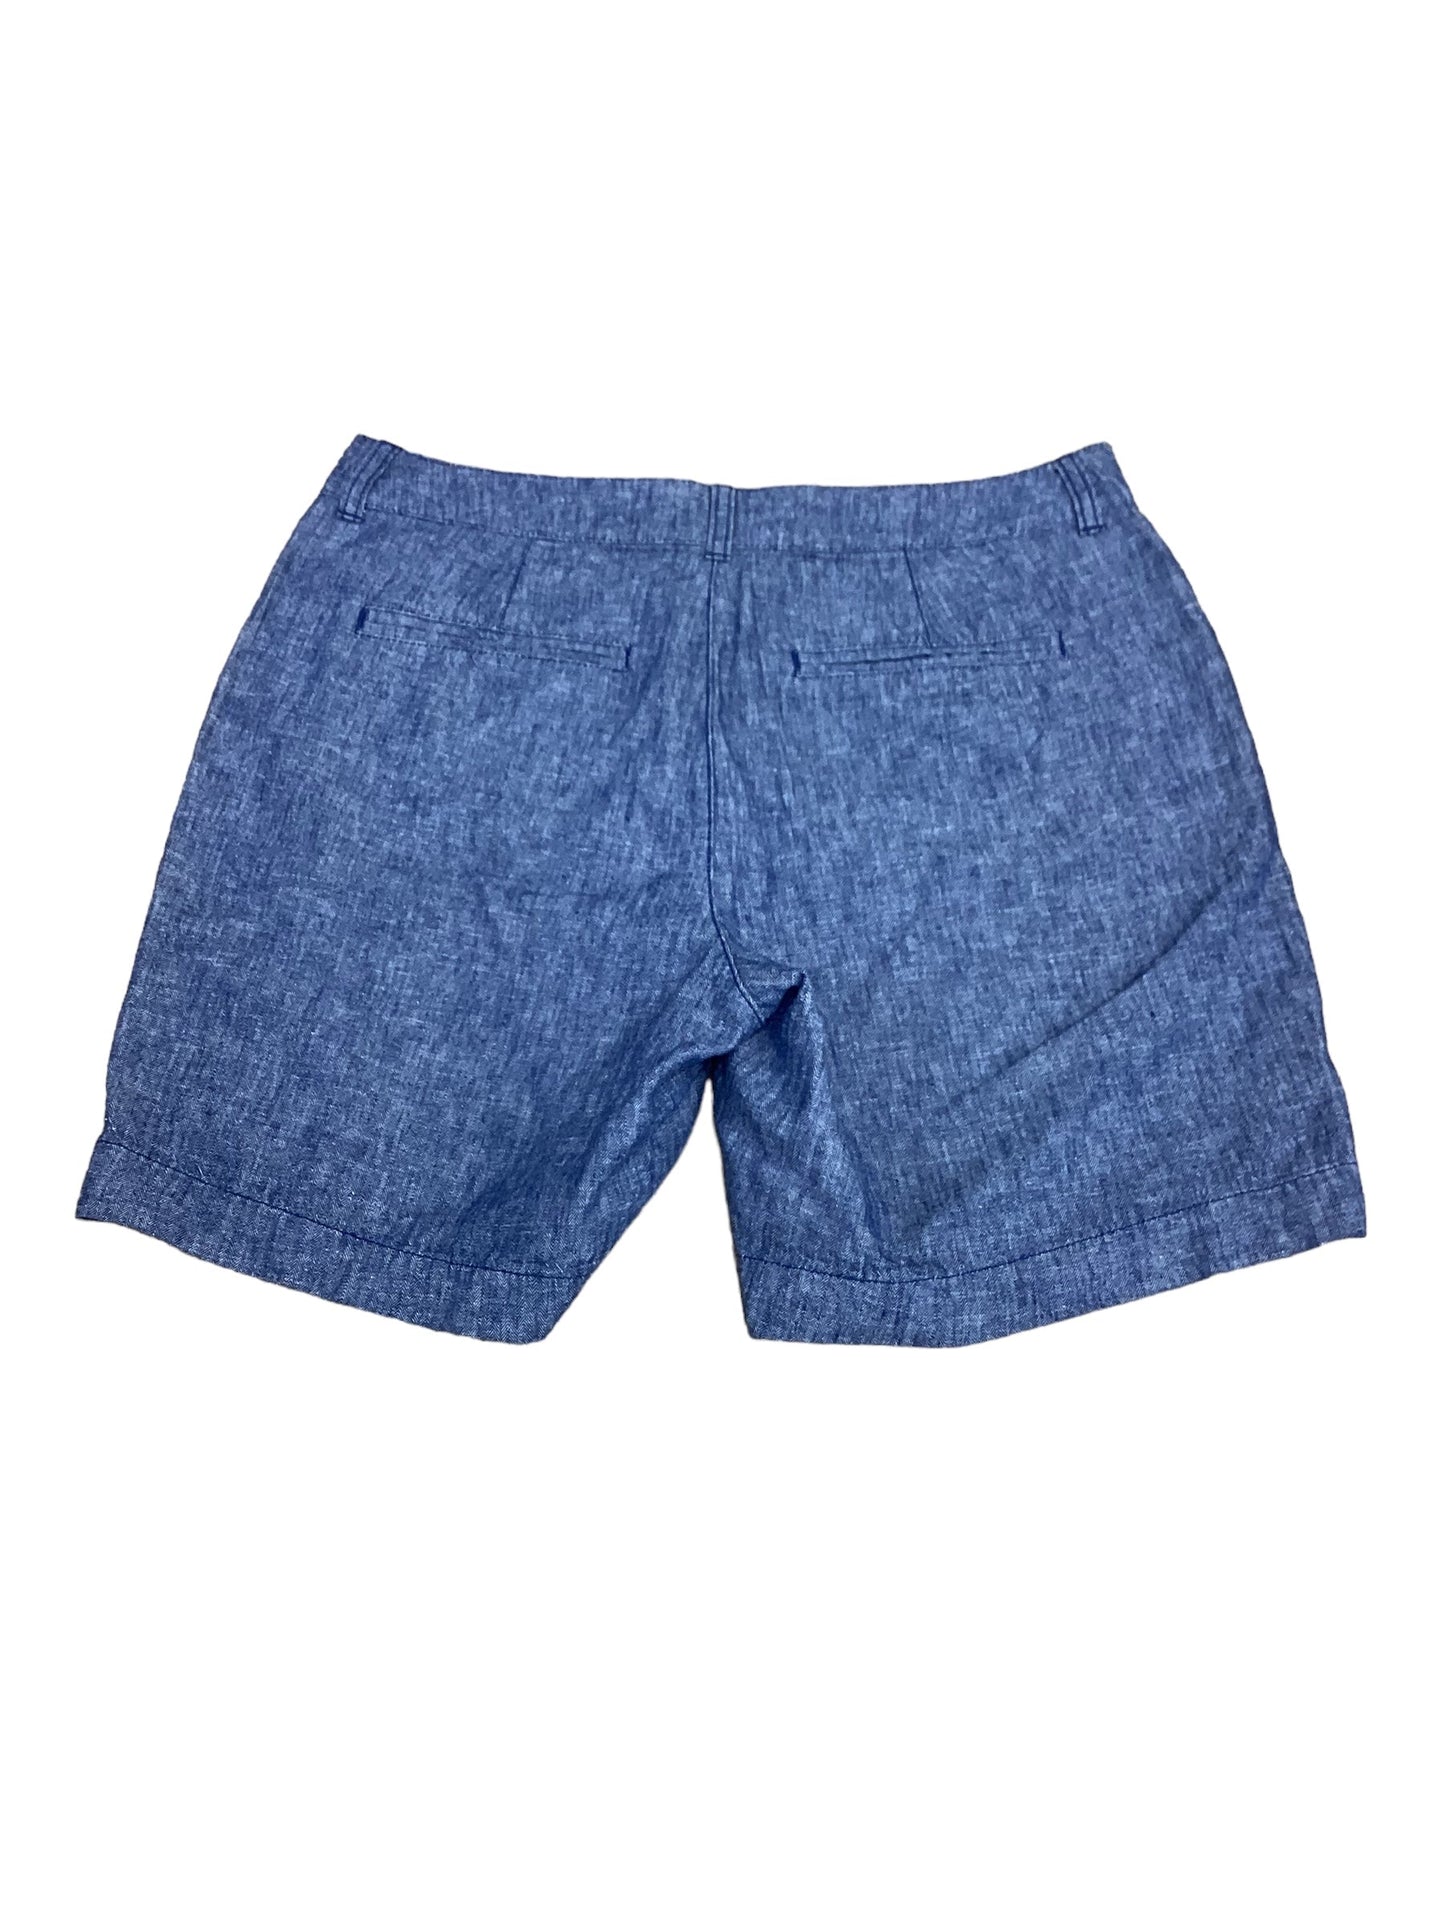 Blue Shorts Old Navy, Size 8